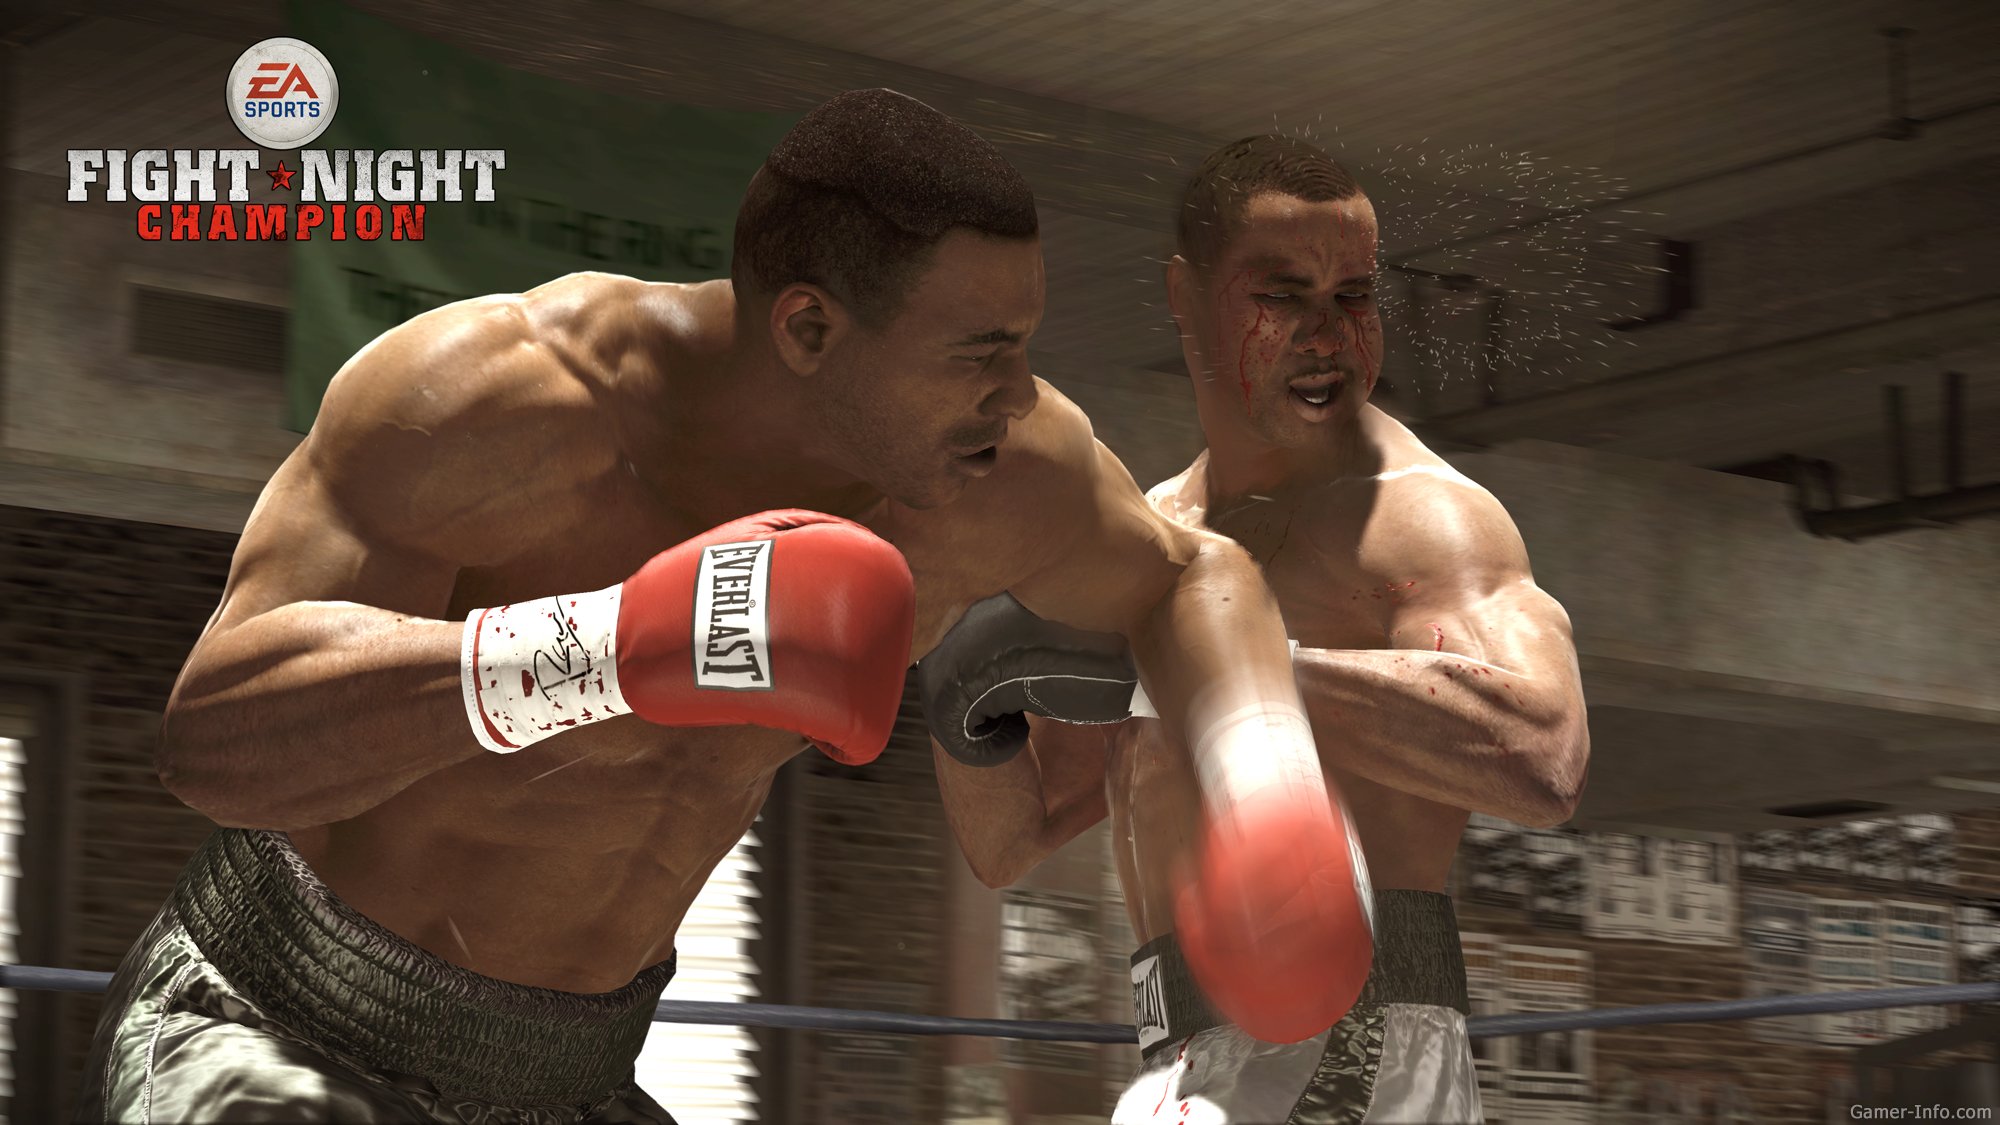 Fight Night Champion (2011 video game)